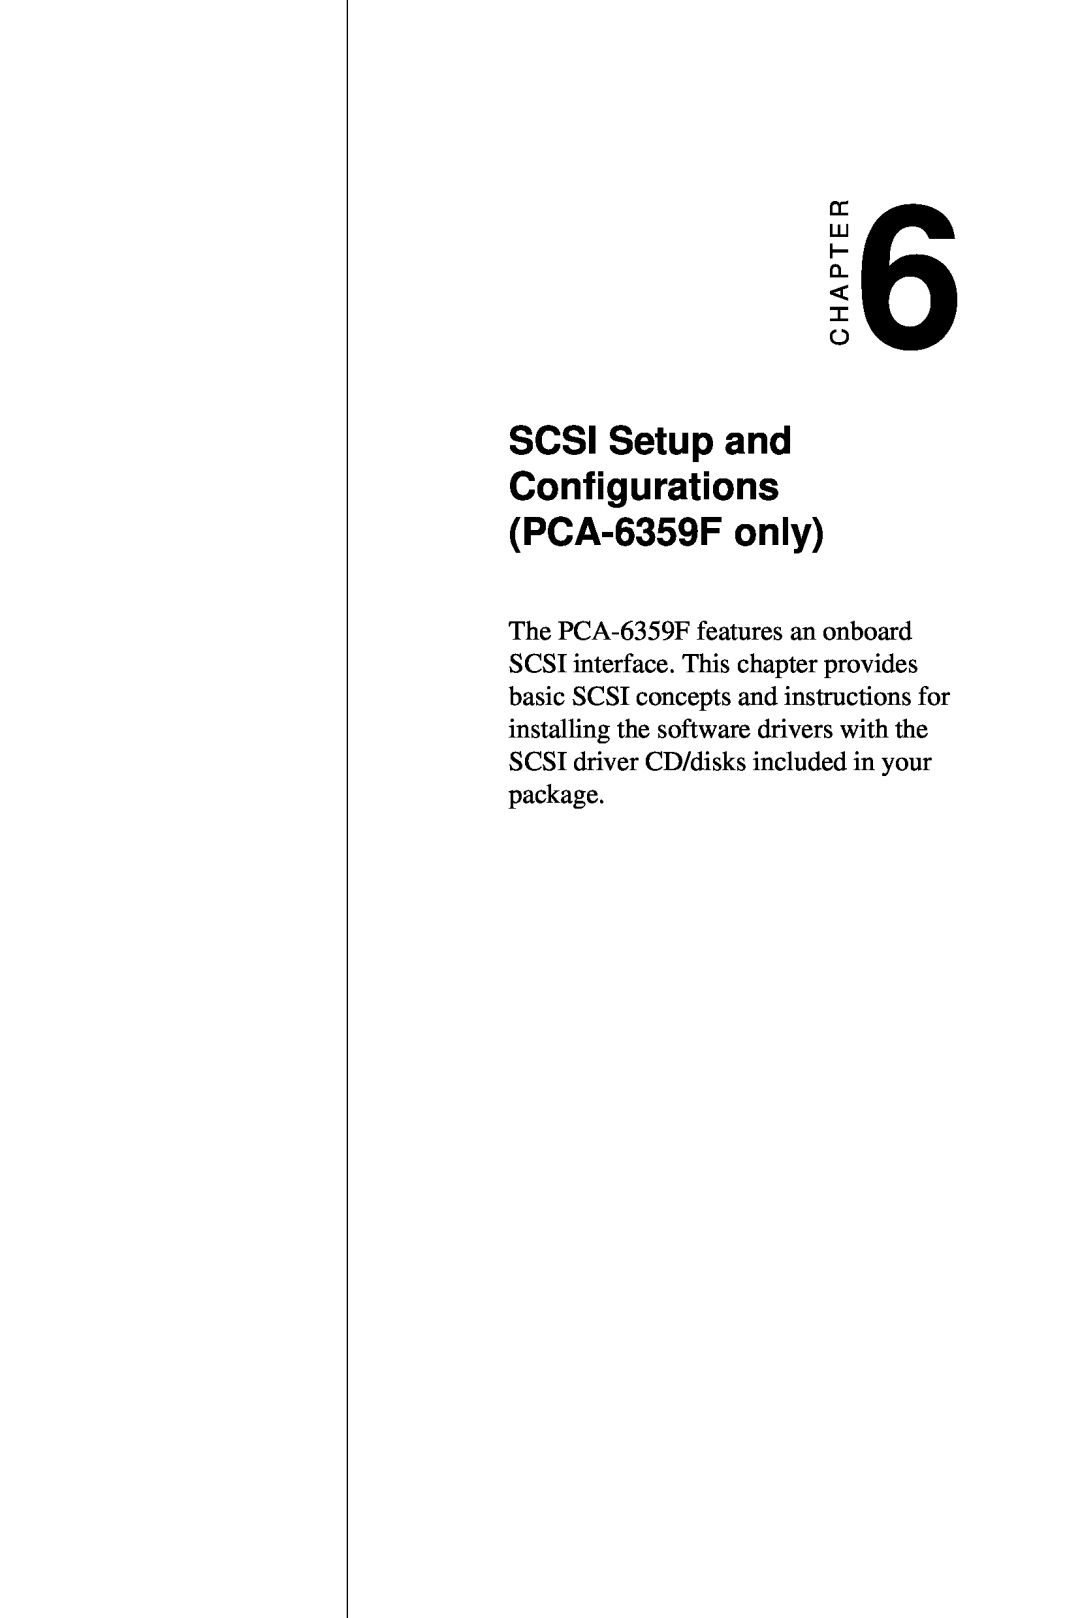 Advantech user manual SCSI Setup and Configurations PCA-6359F only, C H A P T E R 